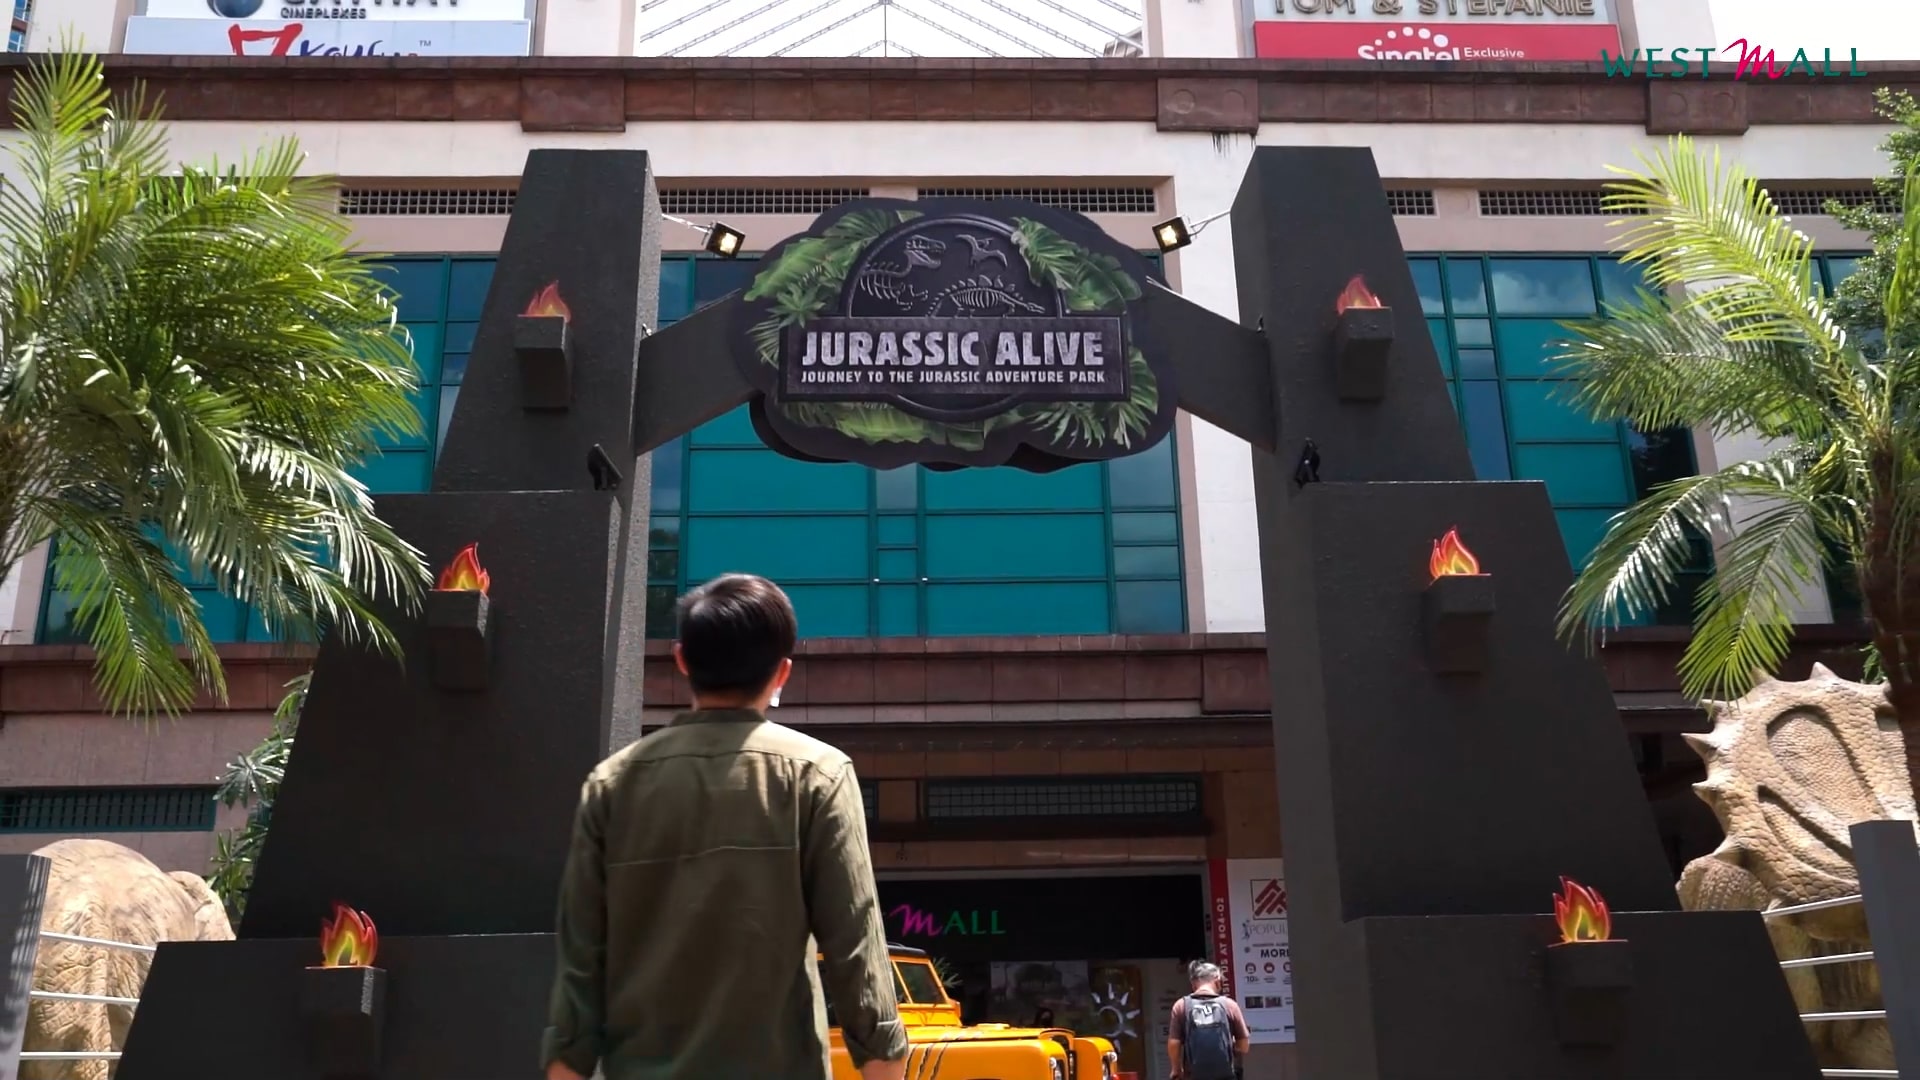 West Mall Jurassic Alive